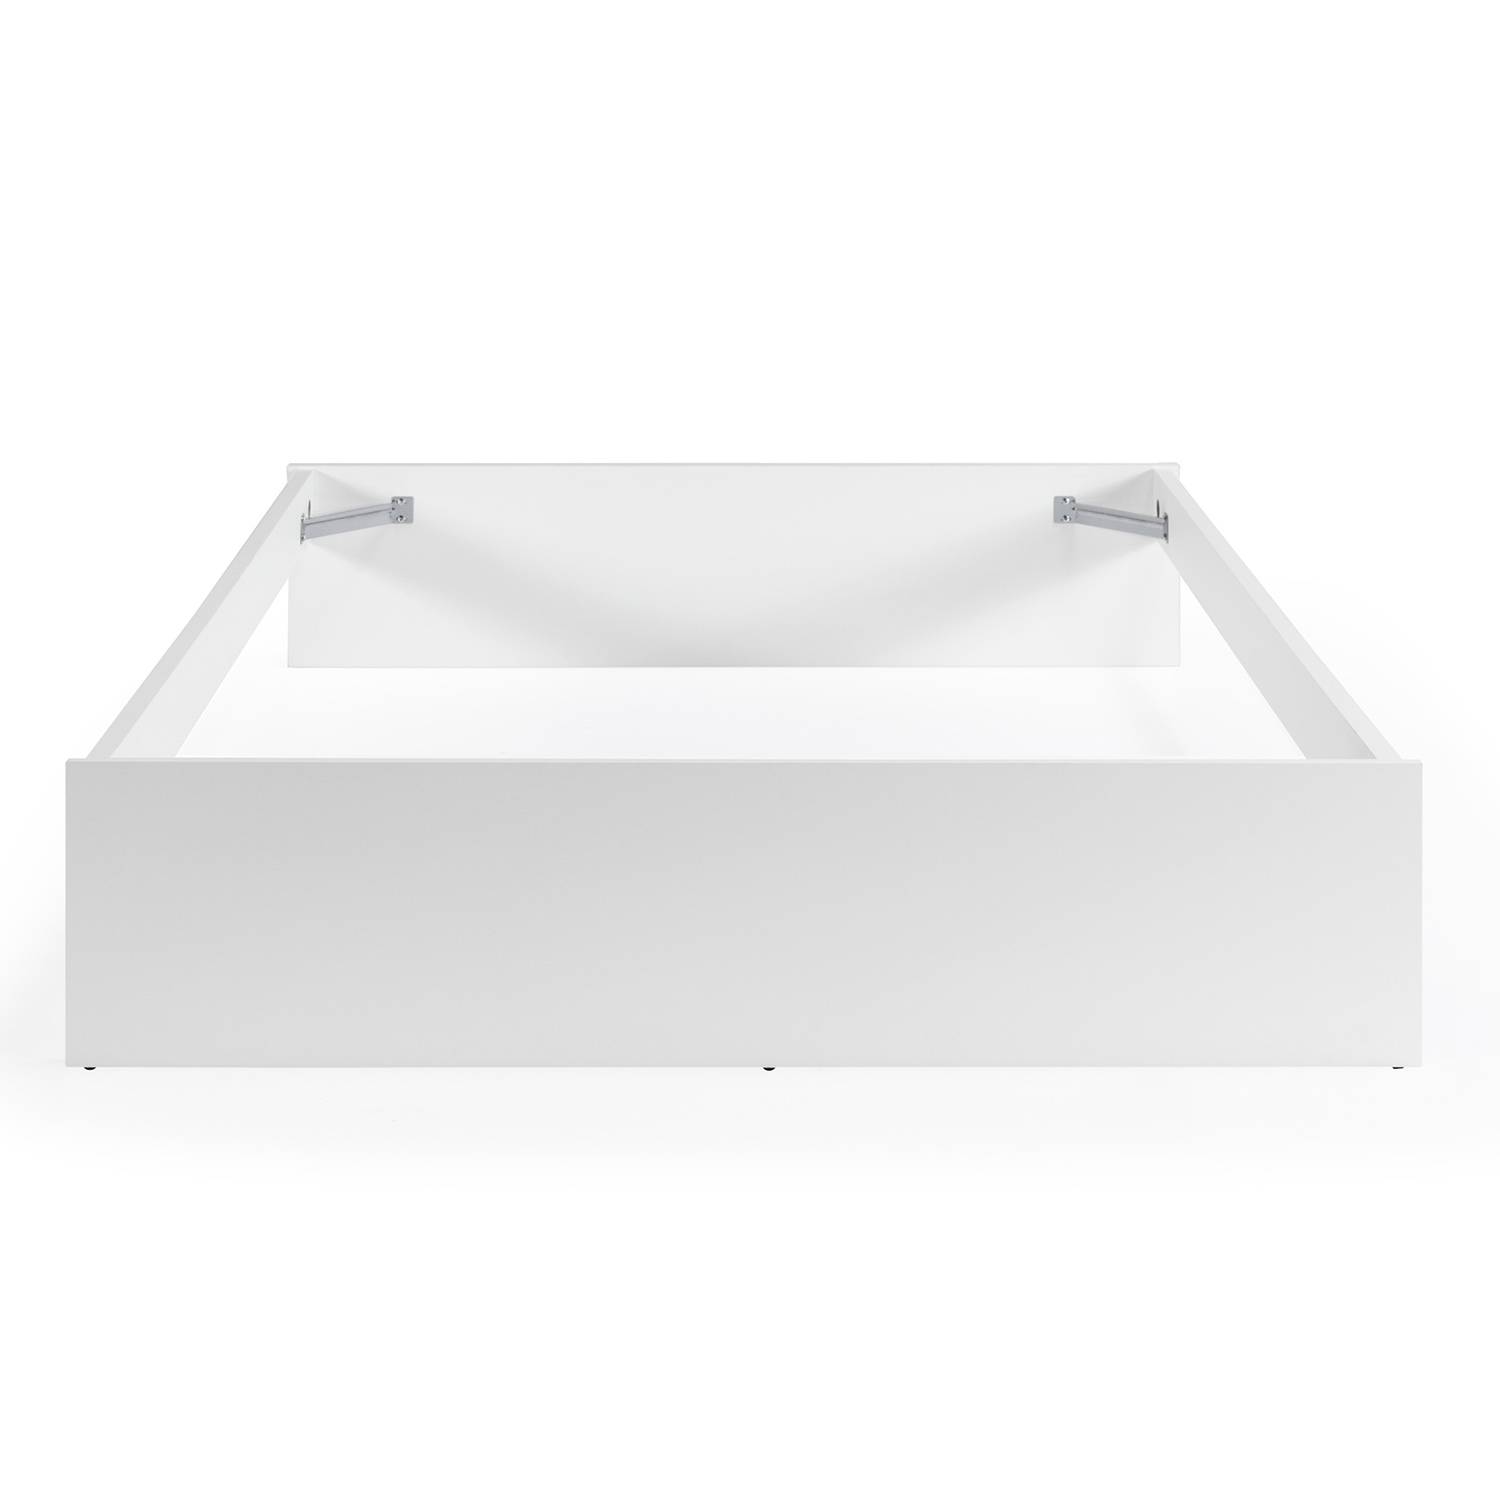 Cama bañera blanca Anahí 150x190 cm